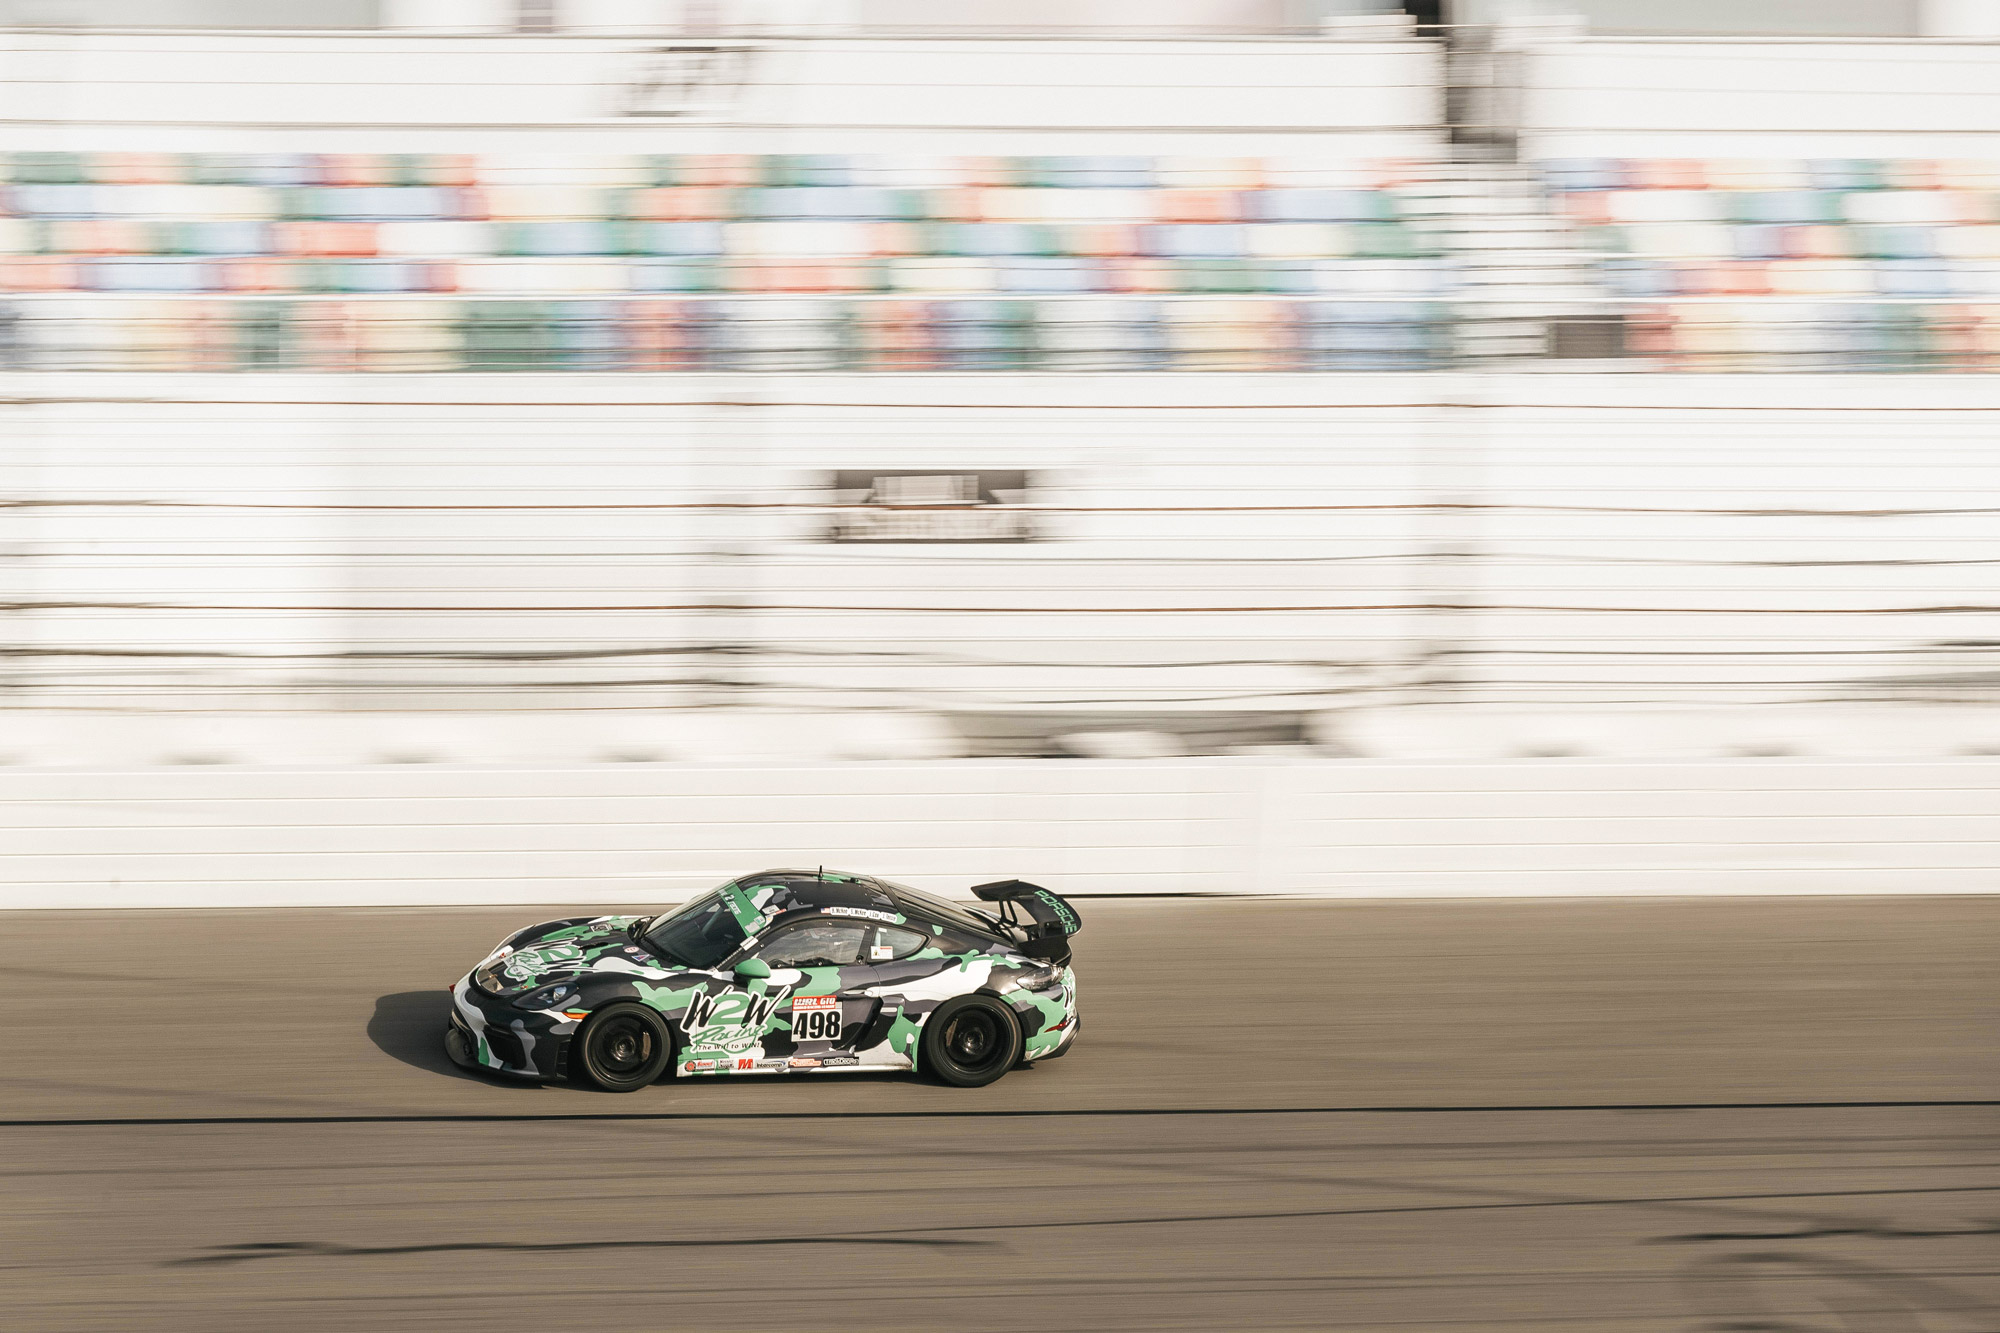 Camo-painted Porsche racing car on the racetrack